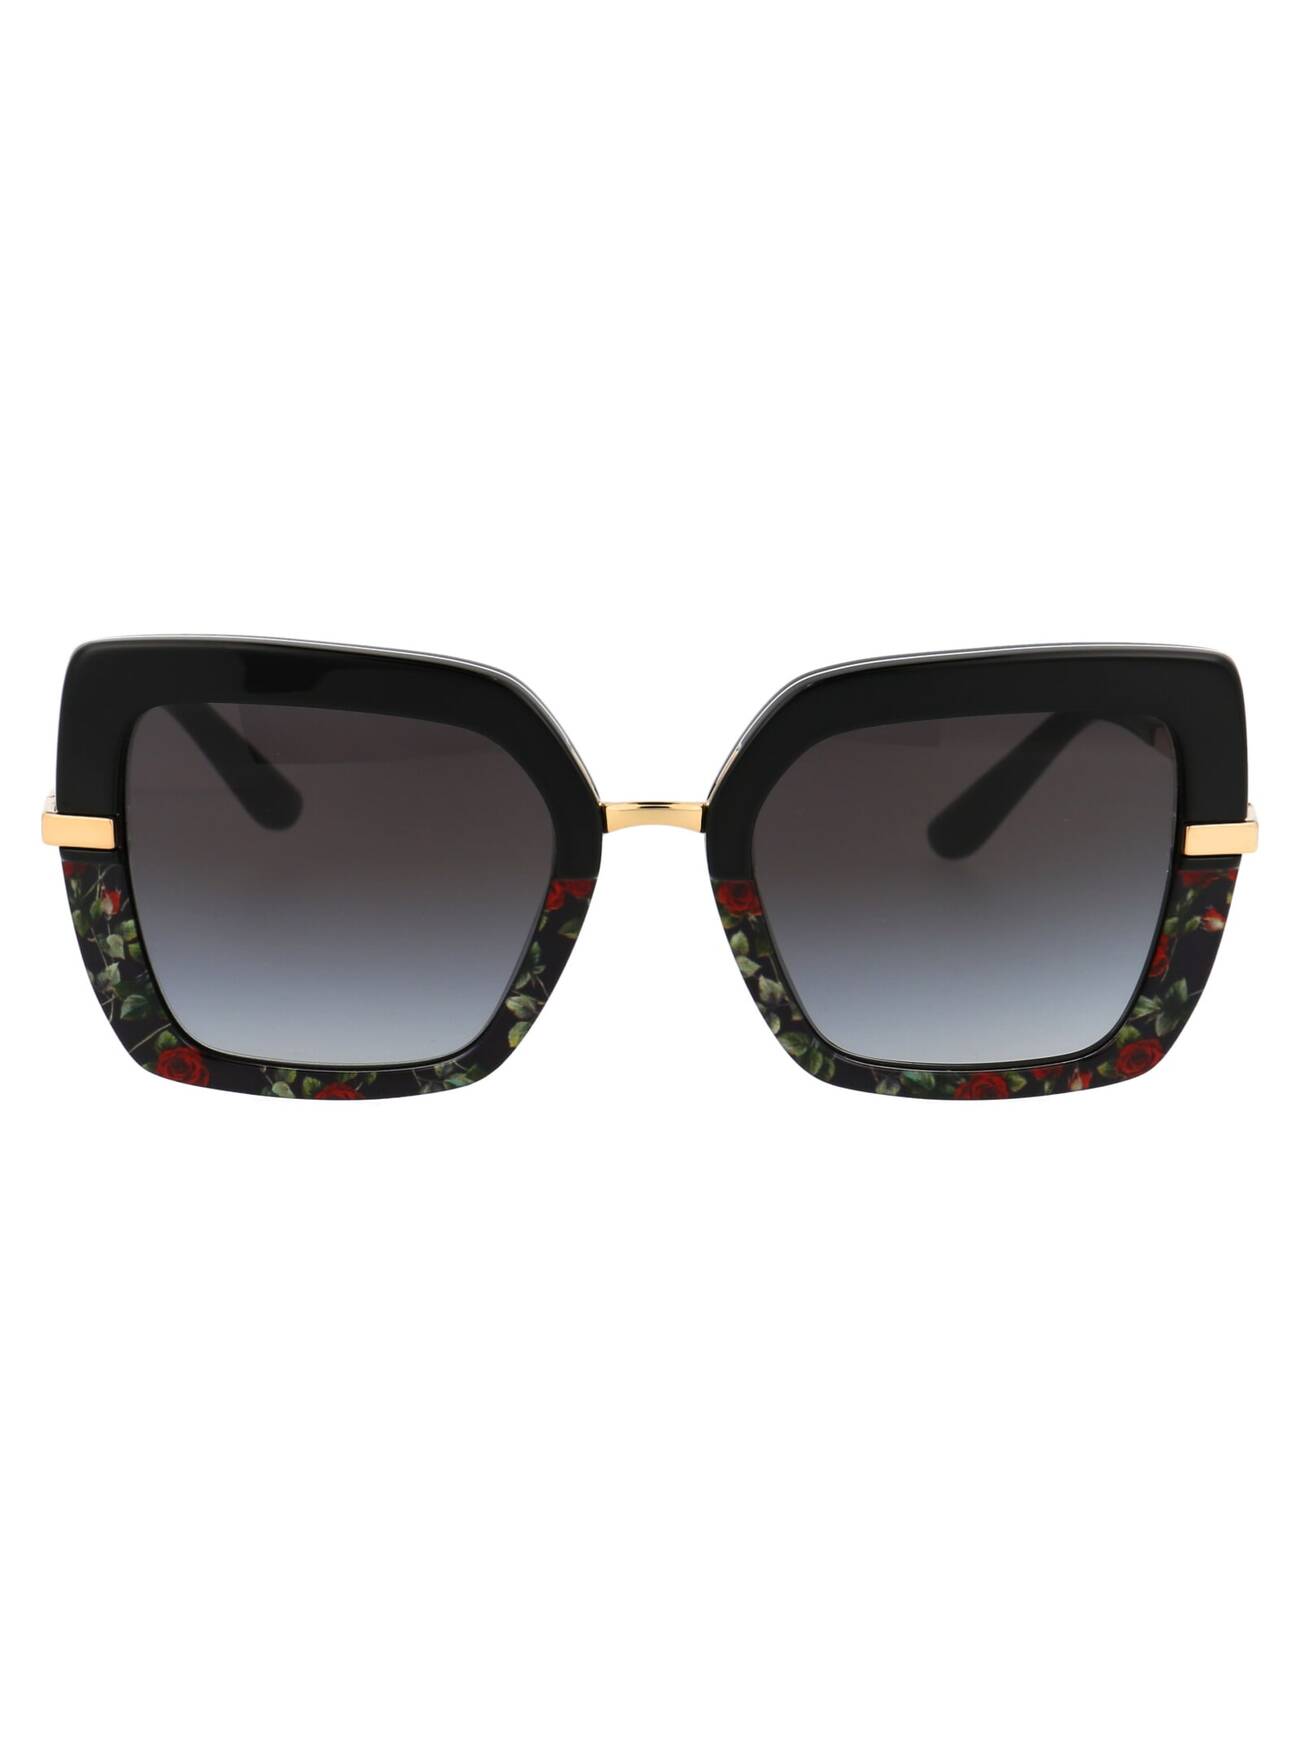 Dolce & Gabbana Eyewear 0dg4373 Sunglasses in black / grey / rose / red